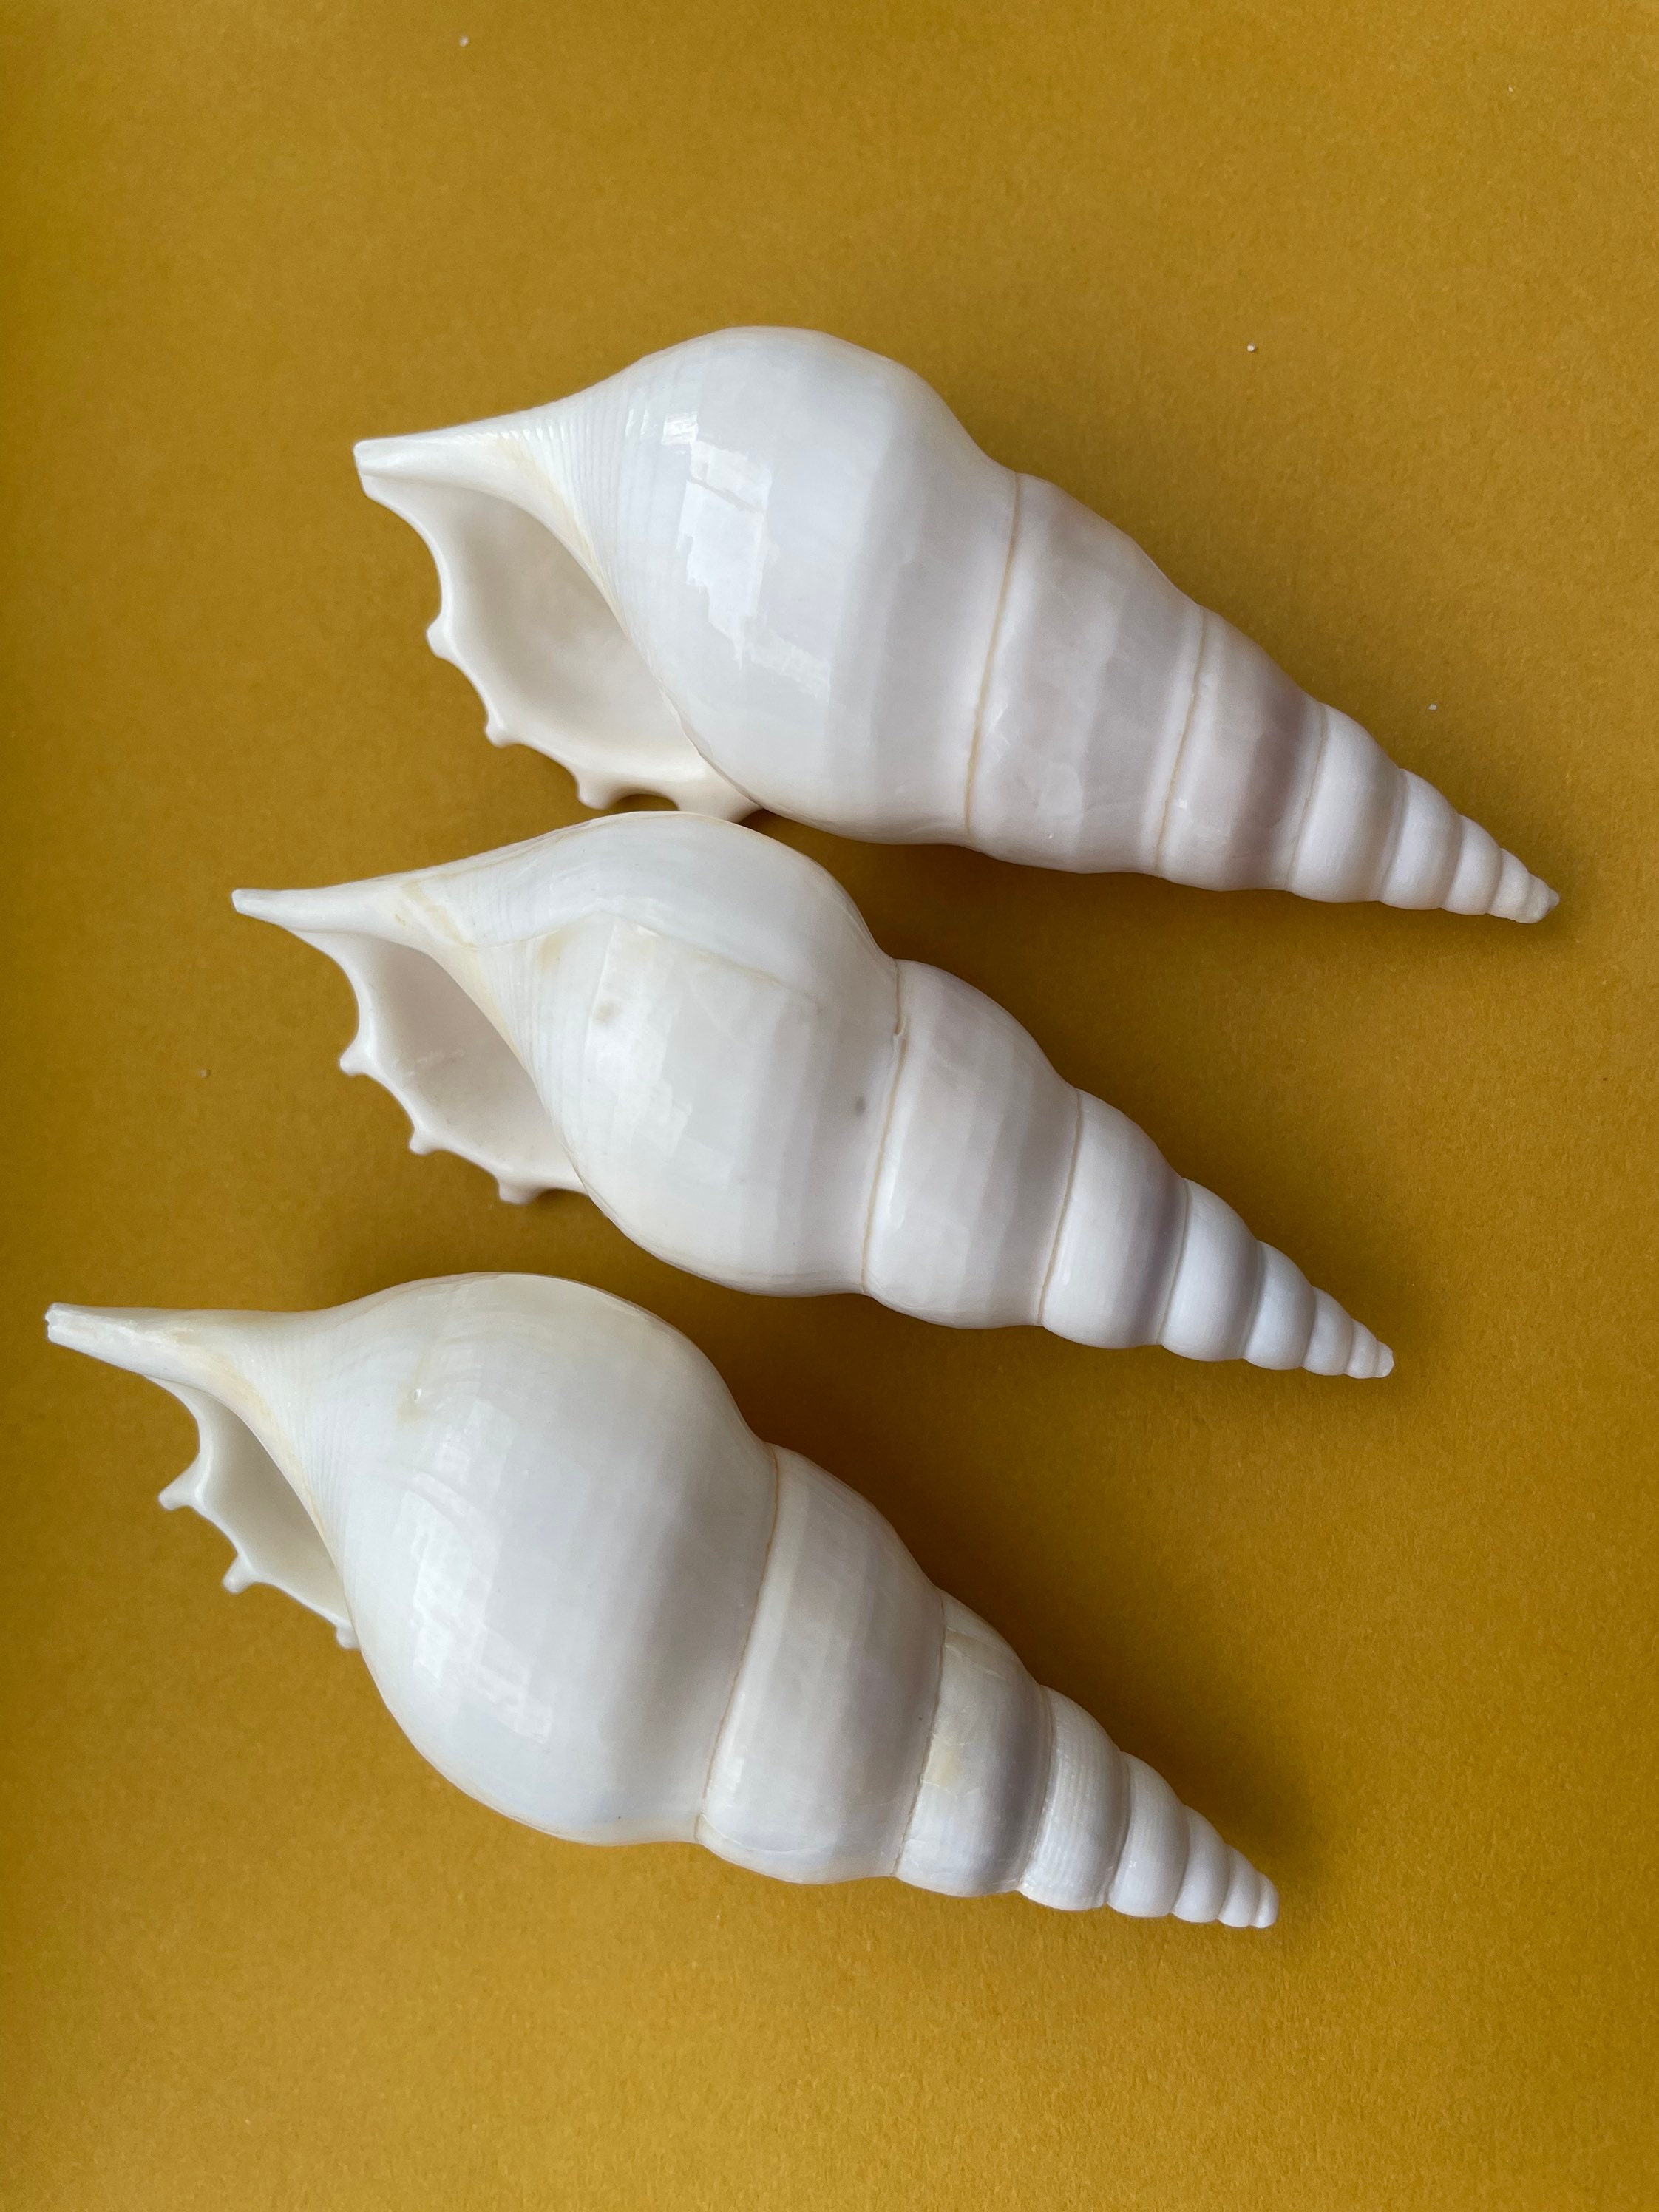 Rare Sea Shells. Gorgeous Beach Shells. Decor for Home, Boat